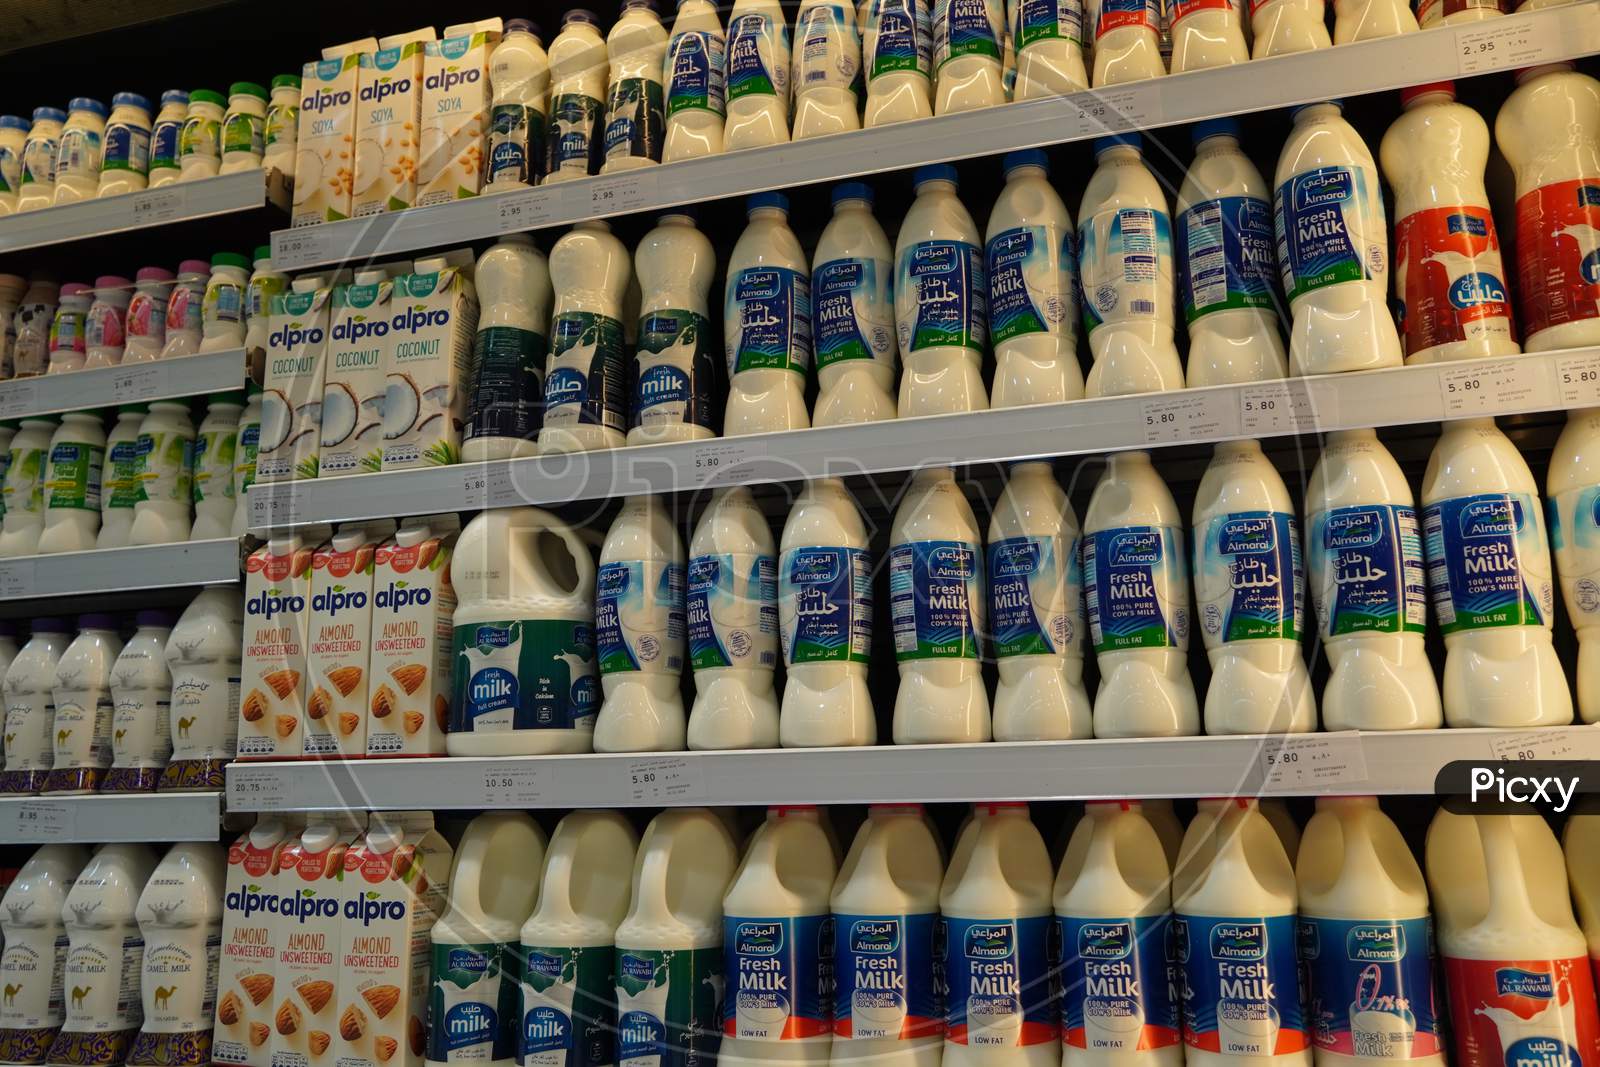 Dubai Uae December 2019 Milk Bottles Arranged On Shelves For Sale. Variety Of Sizes. Also Present Flavored Milk Strawberry Milk, Camel Milk, Coconut Milk, Almond Milk. Almarai Brand Milk Bottles.